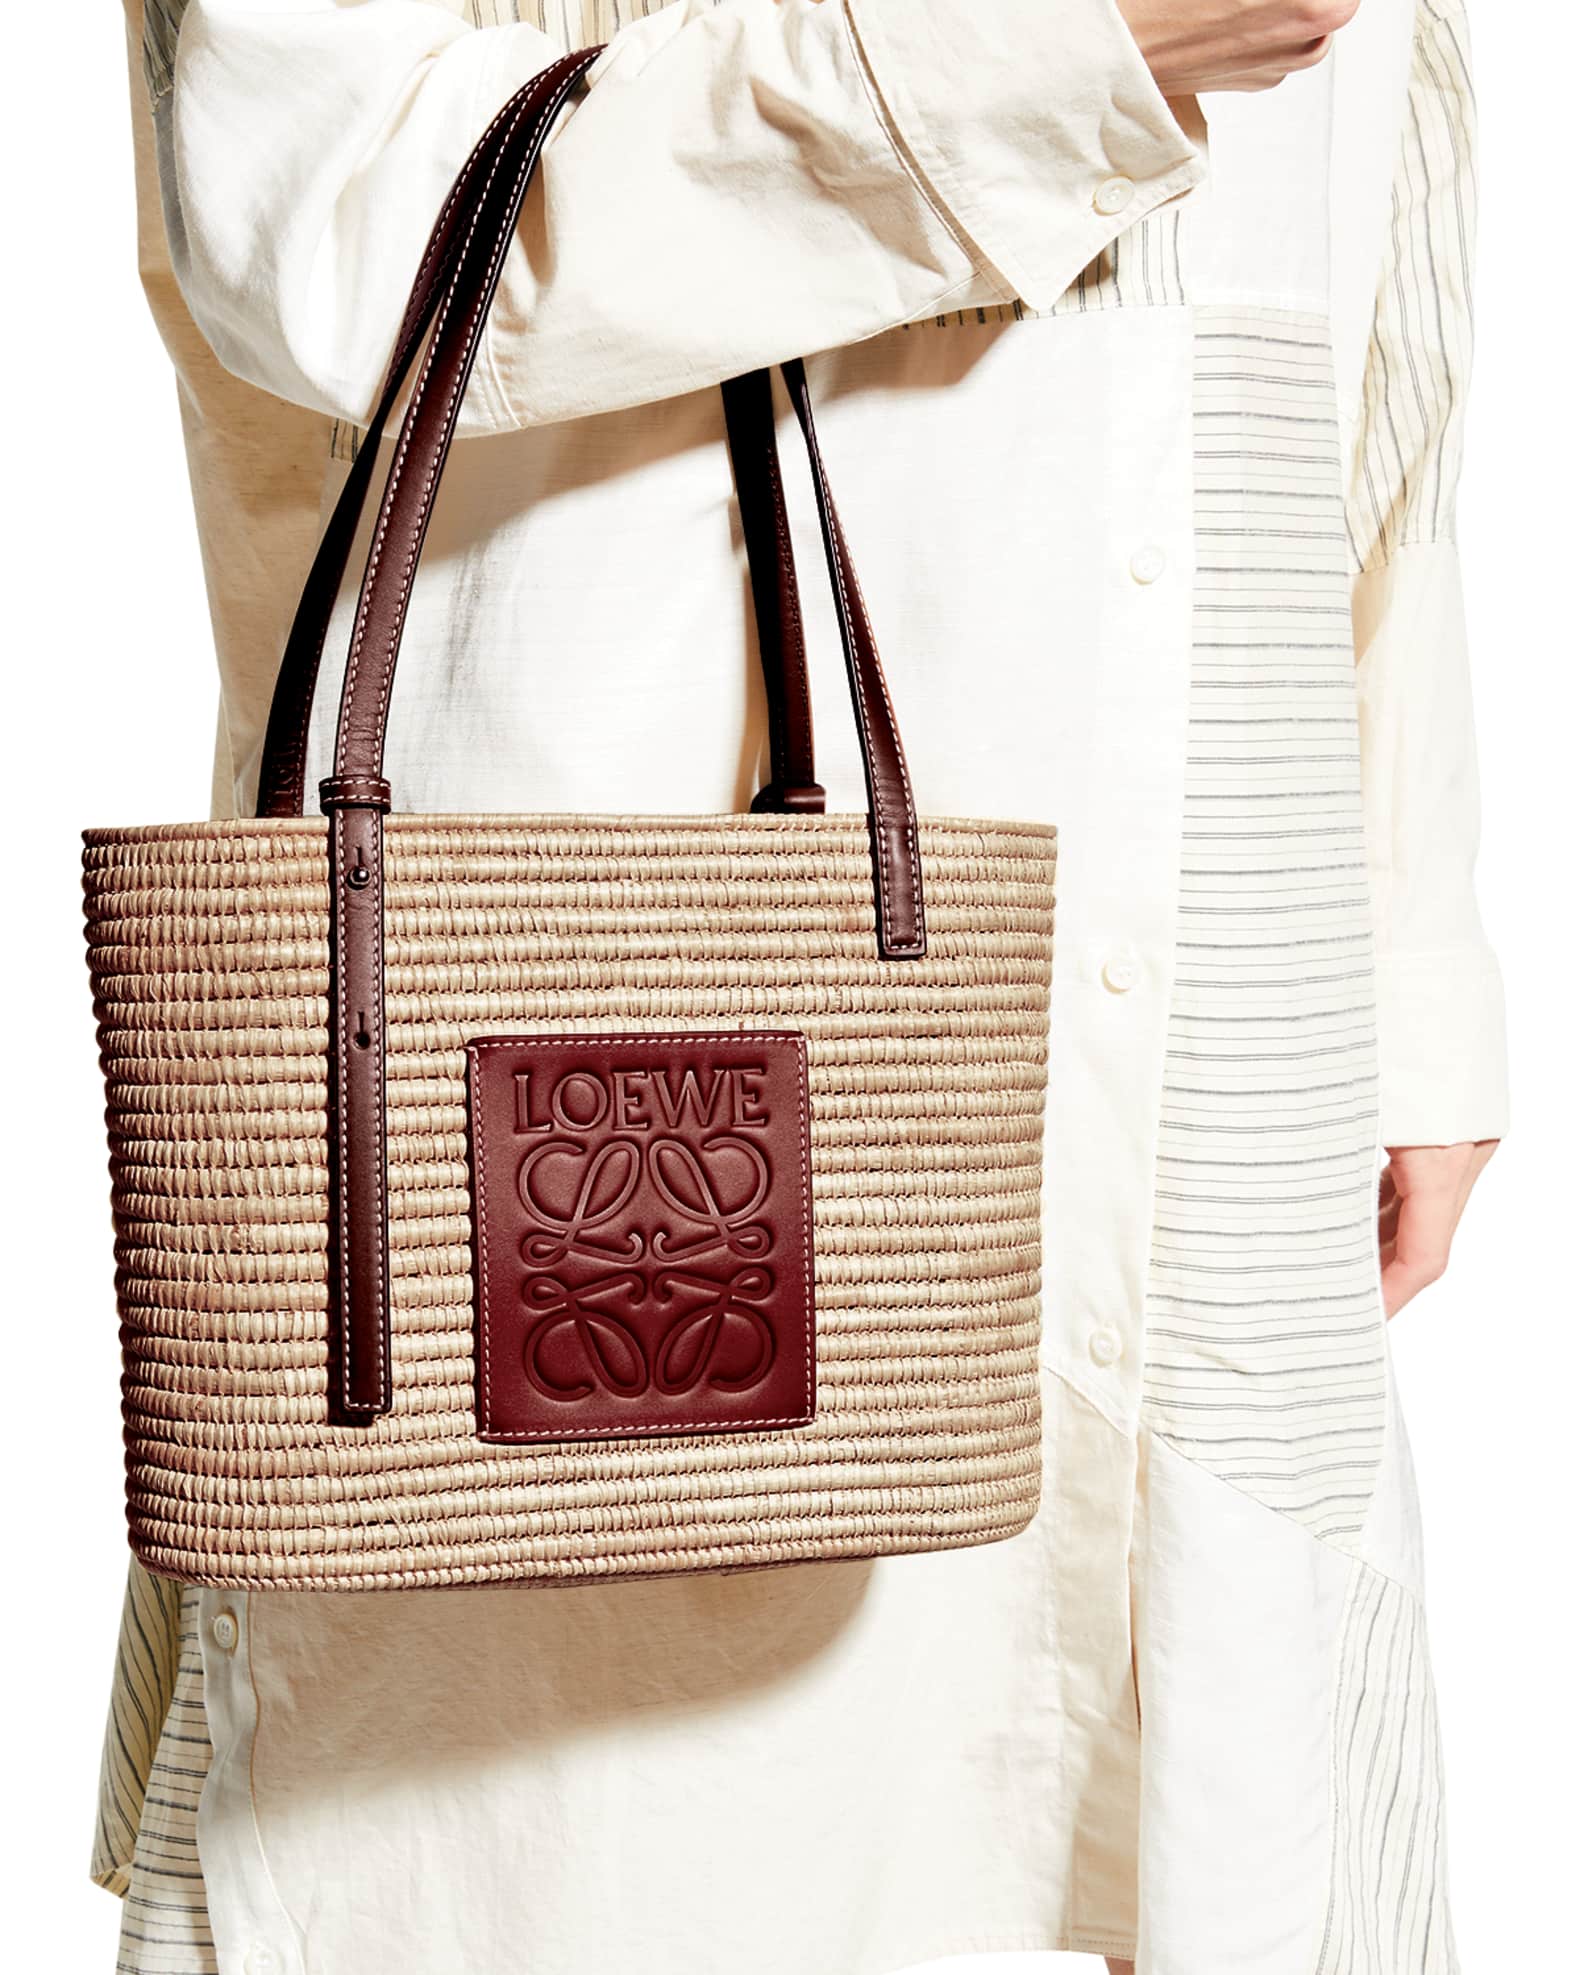 Loewe x Paula's Ibiza Square Basket Small Bag in Raffia with Leather Handles | Neiman Marcus